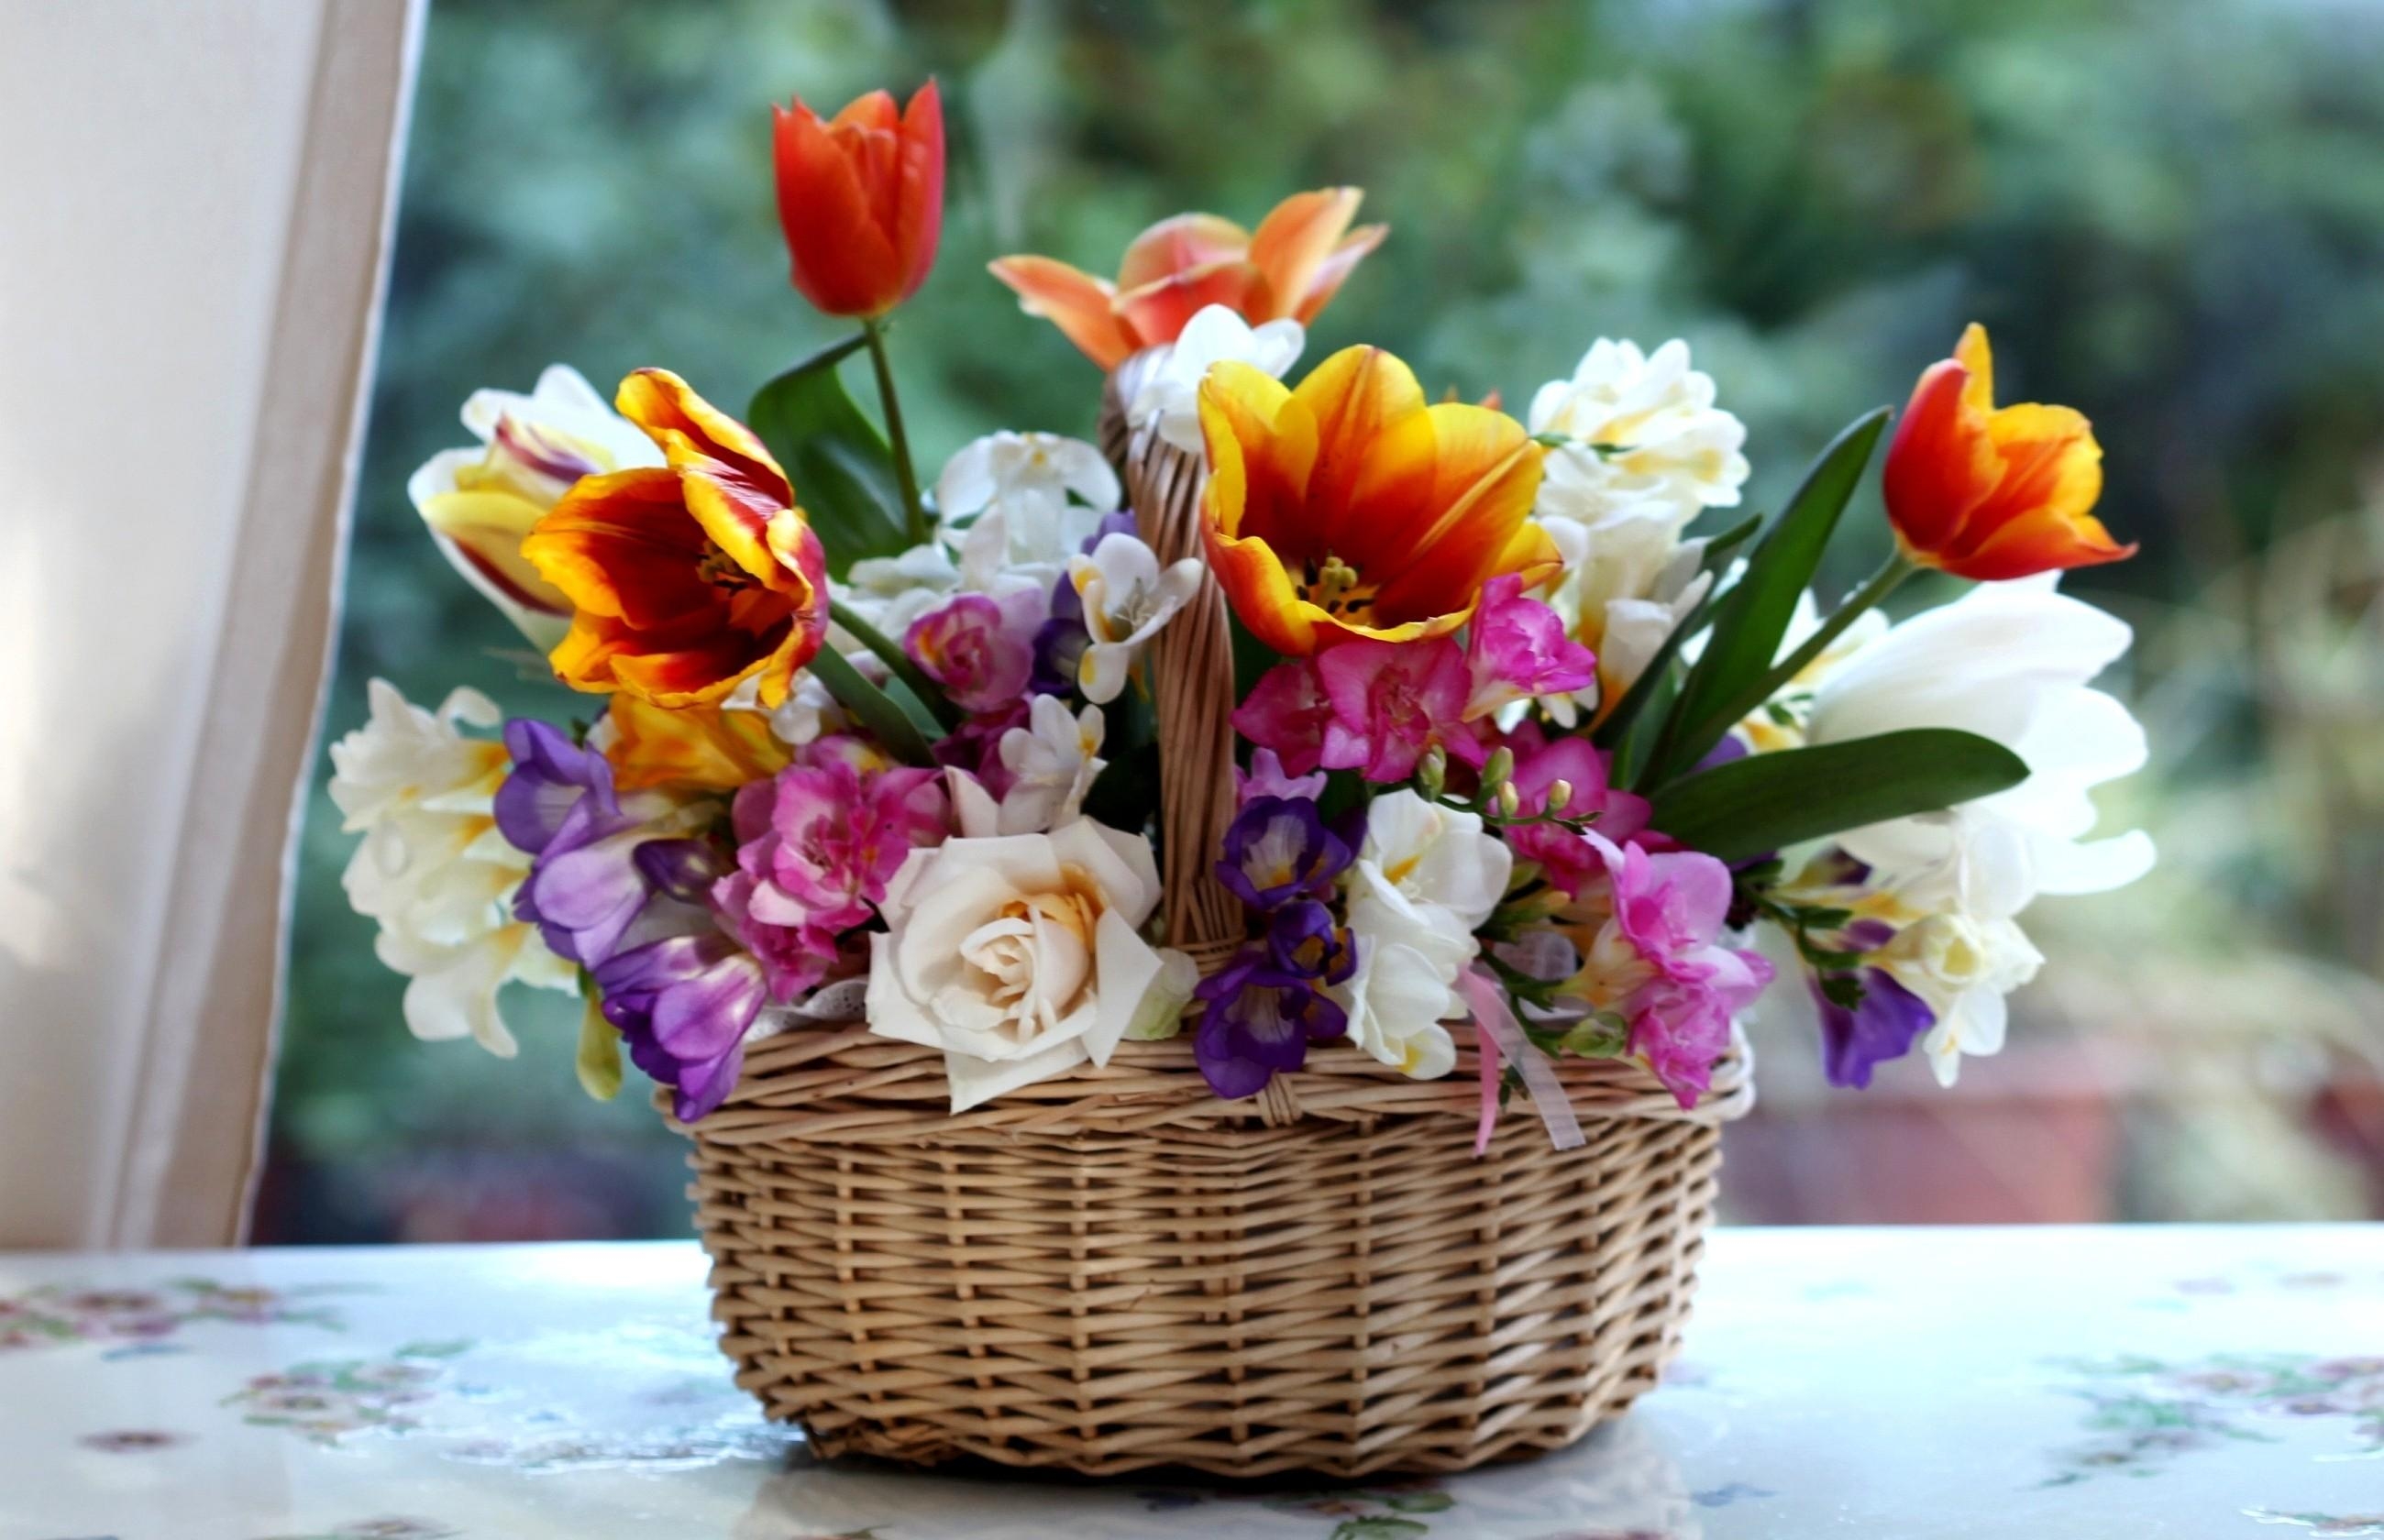 75203 Salvapantallas y fondos de pantalla Tulipanes en tu teléfono. Descarga imágenes de tulipanes, flores, roses, cesta, canasta, composición, combinación, fresia, freesia gratis